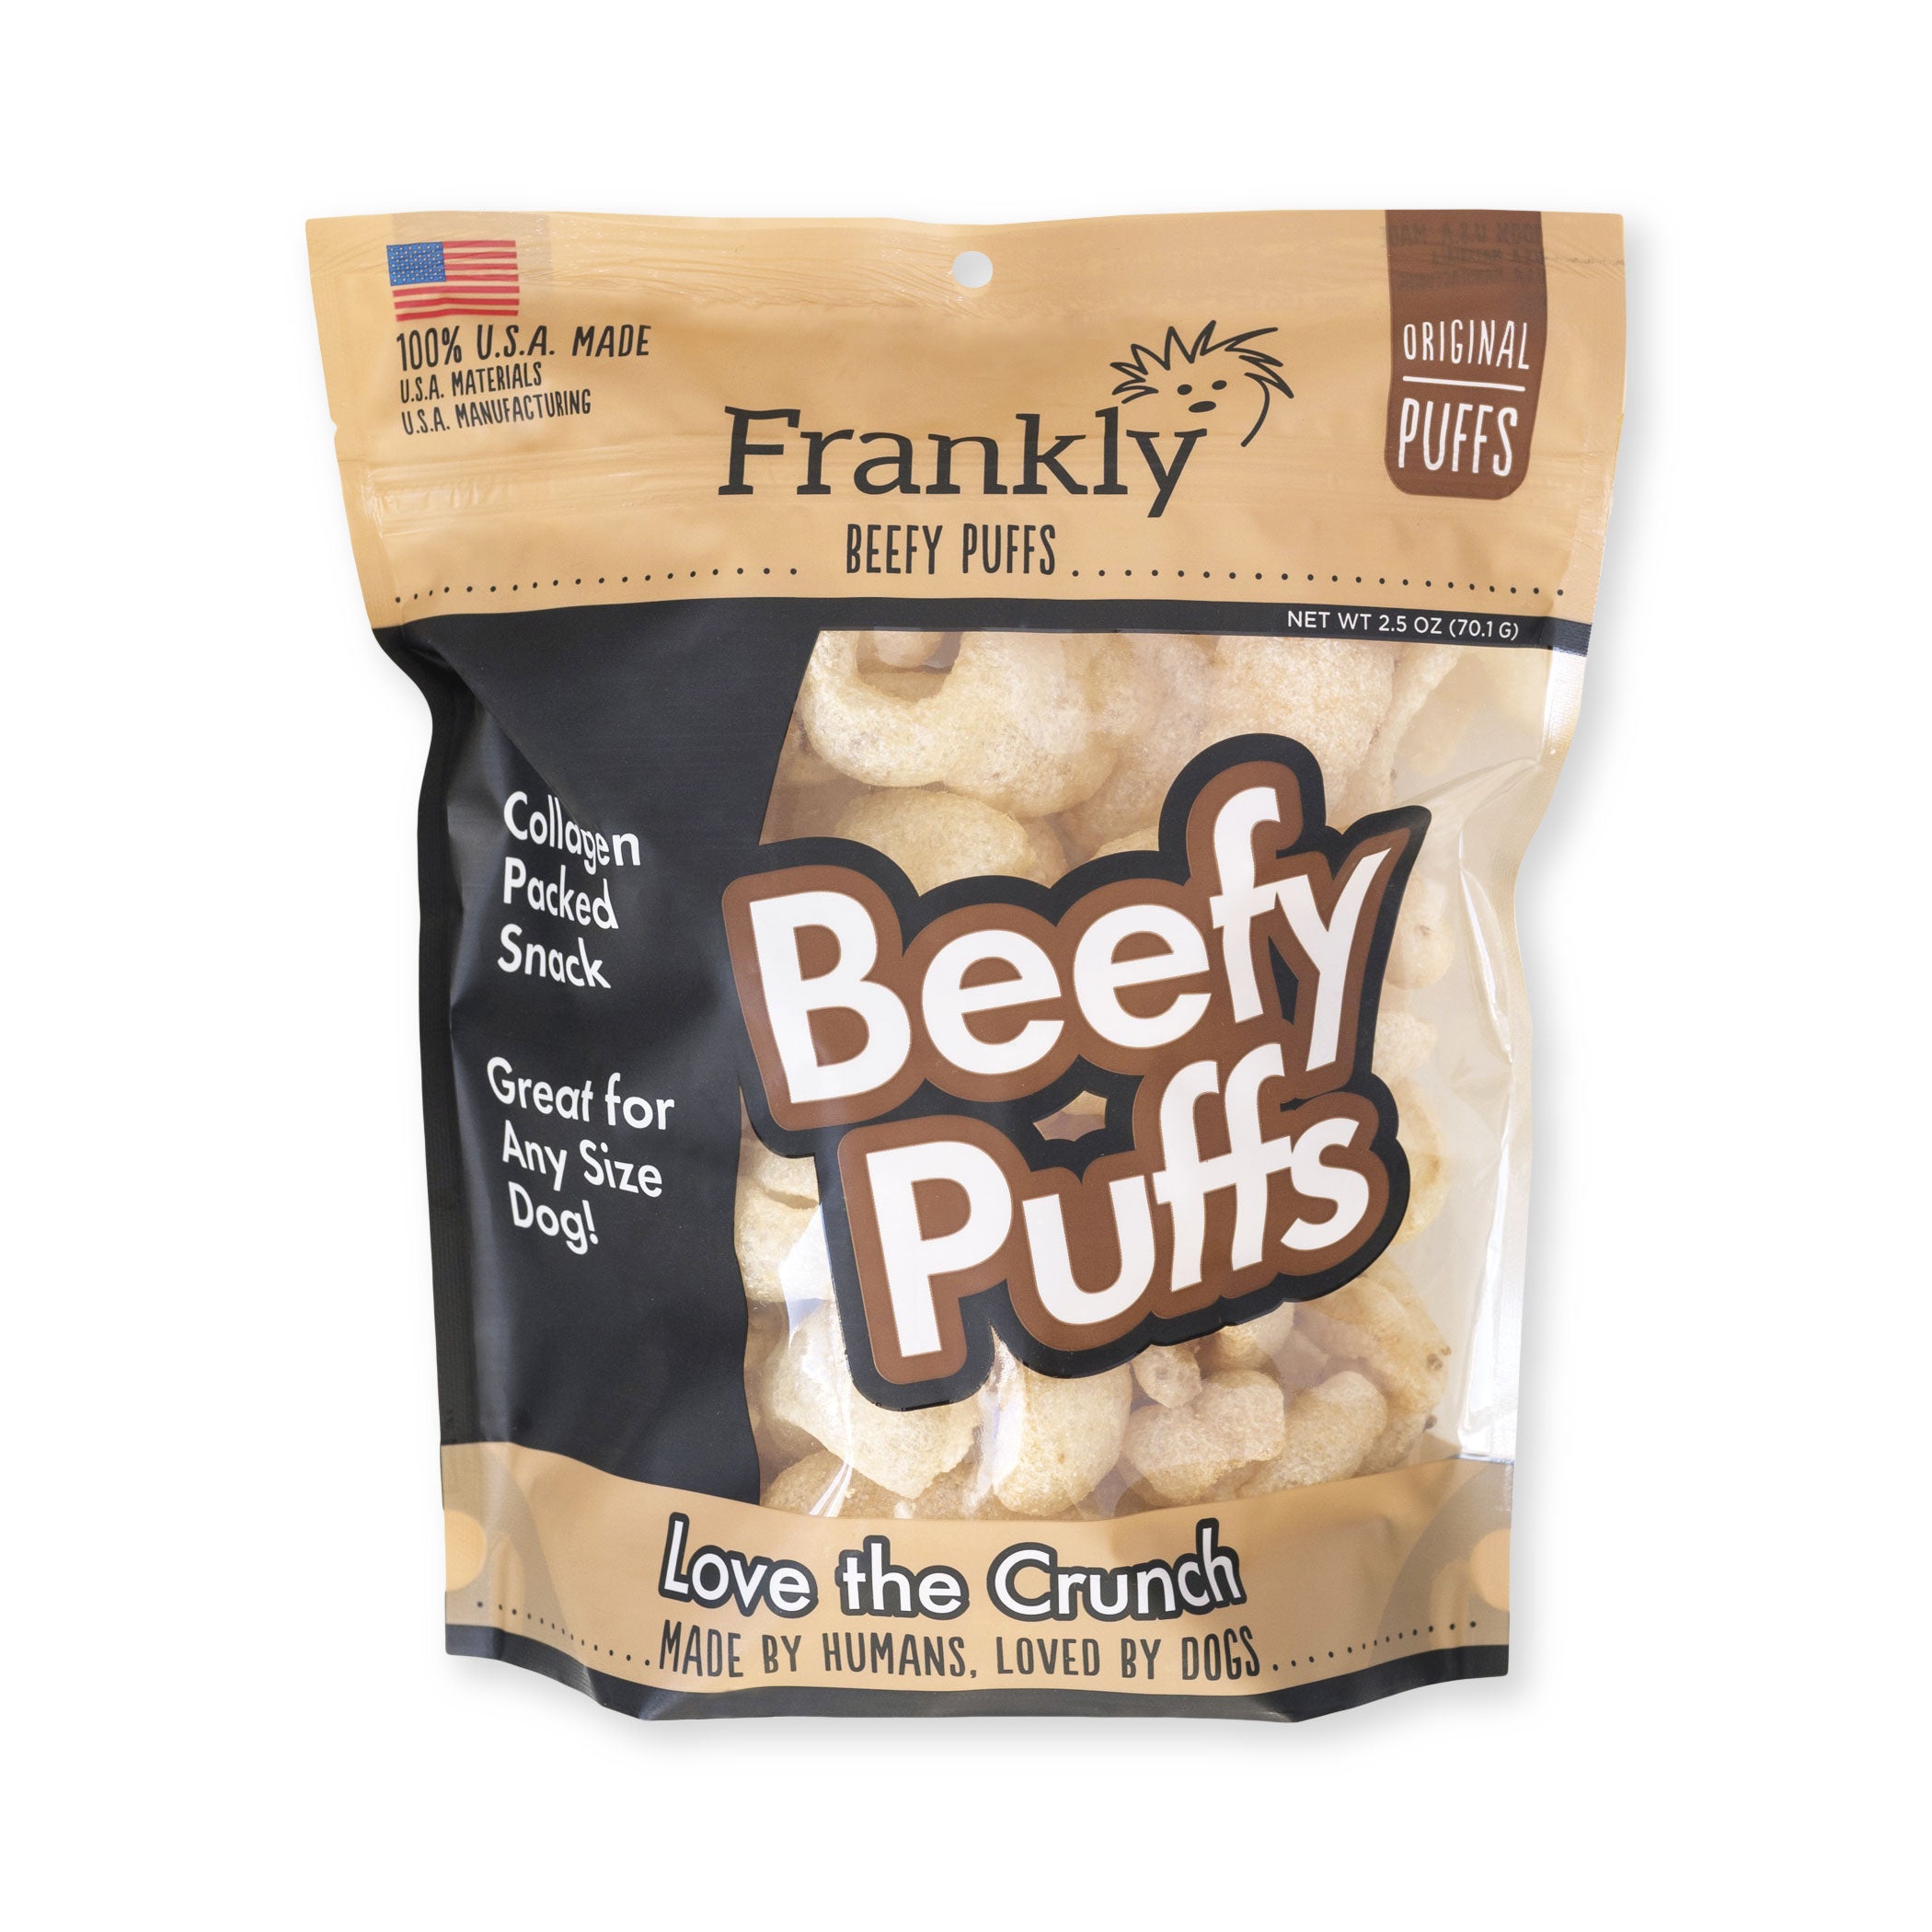 Frankly Pet Beefy Puffs Original Dog Treats, 5oz